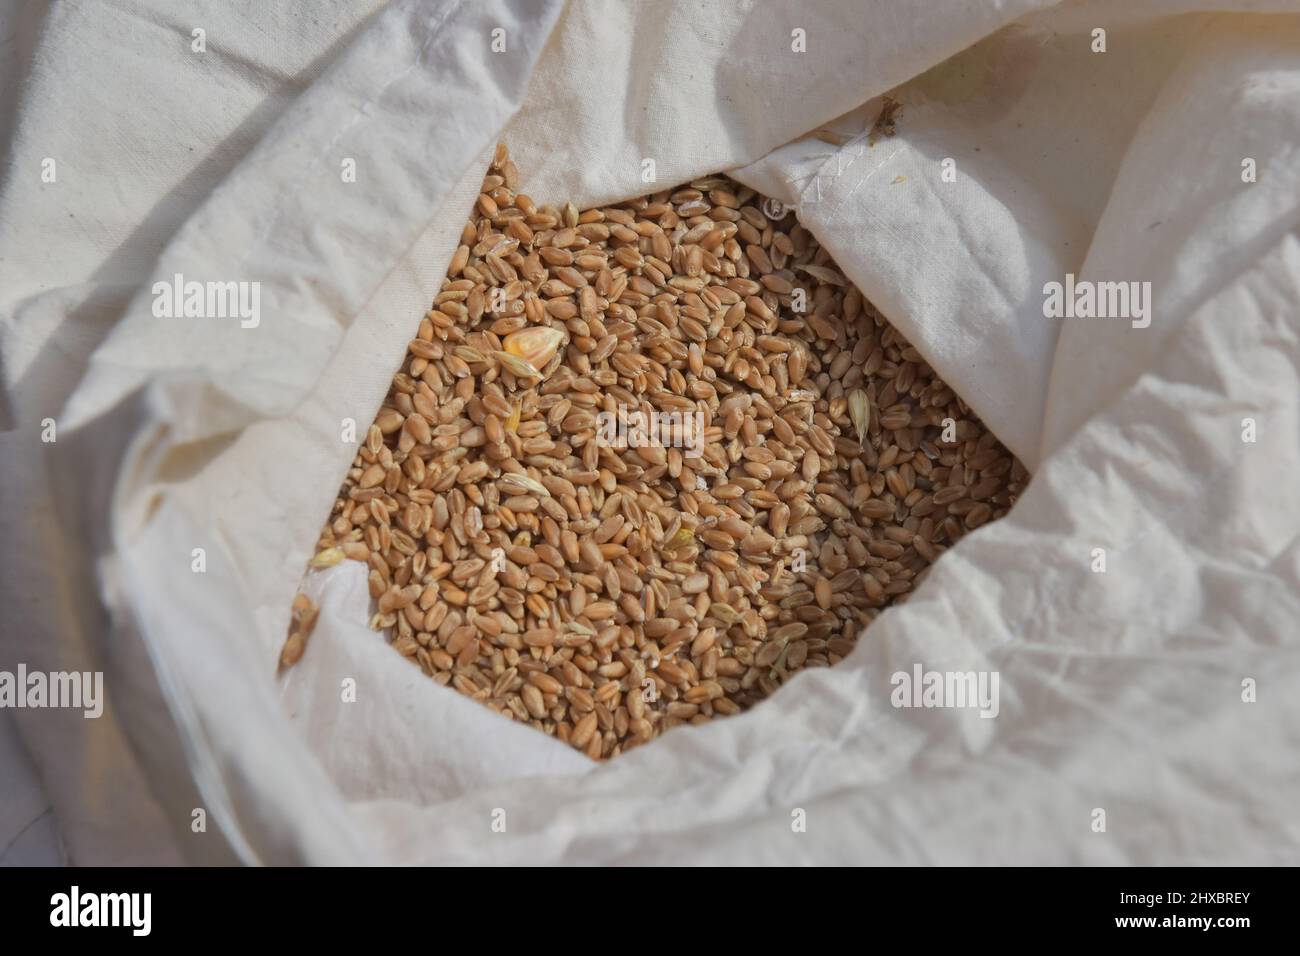 A bag of wheat grain. Stock Photo